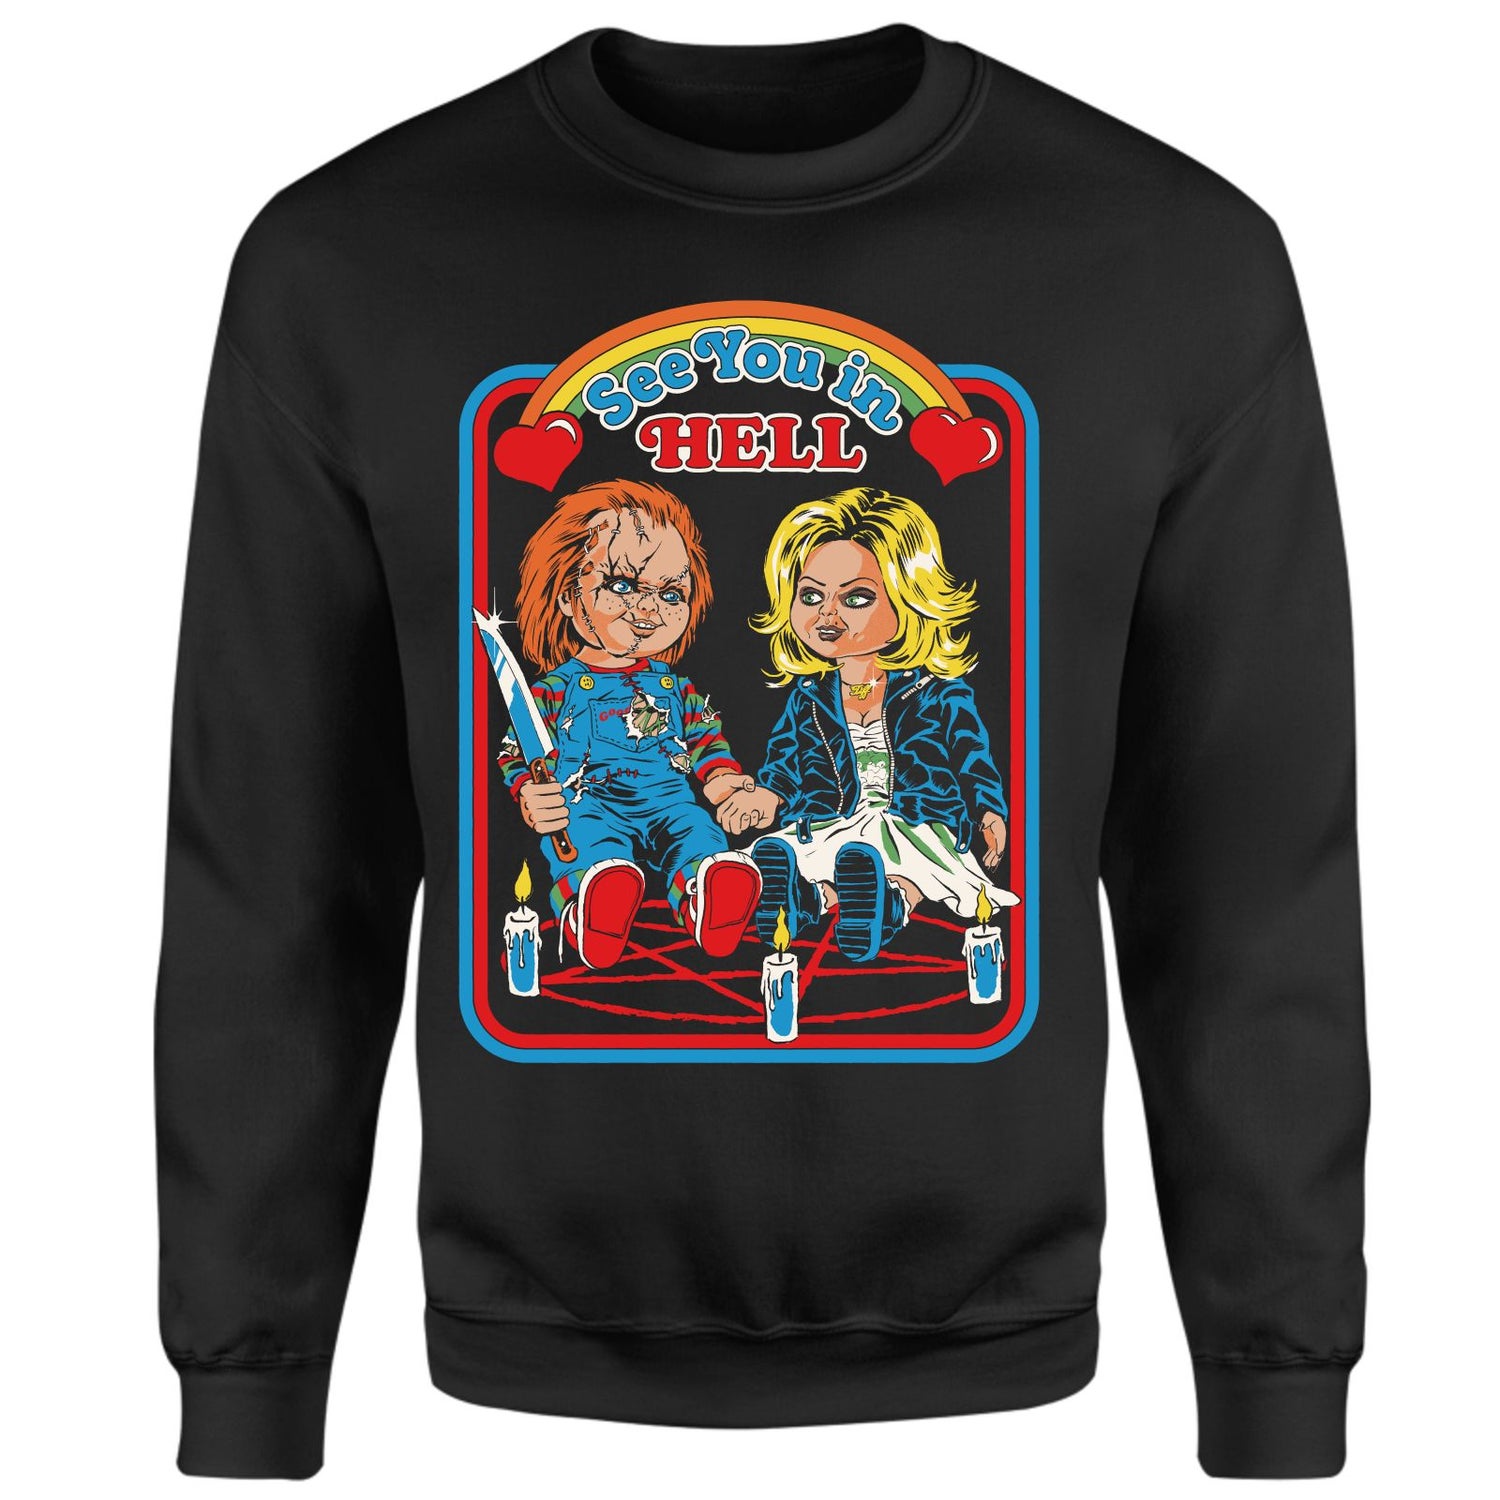 Steven Rhodes Chucky See You In Hell Sweatshirt - Black